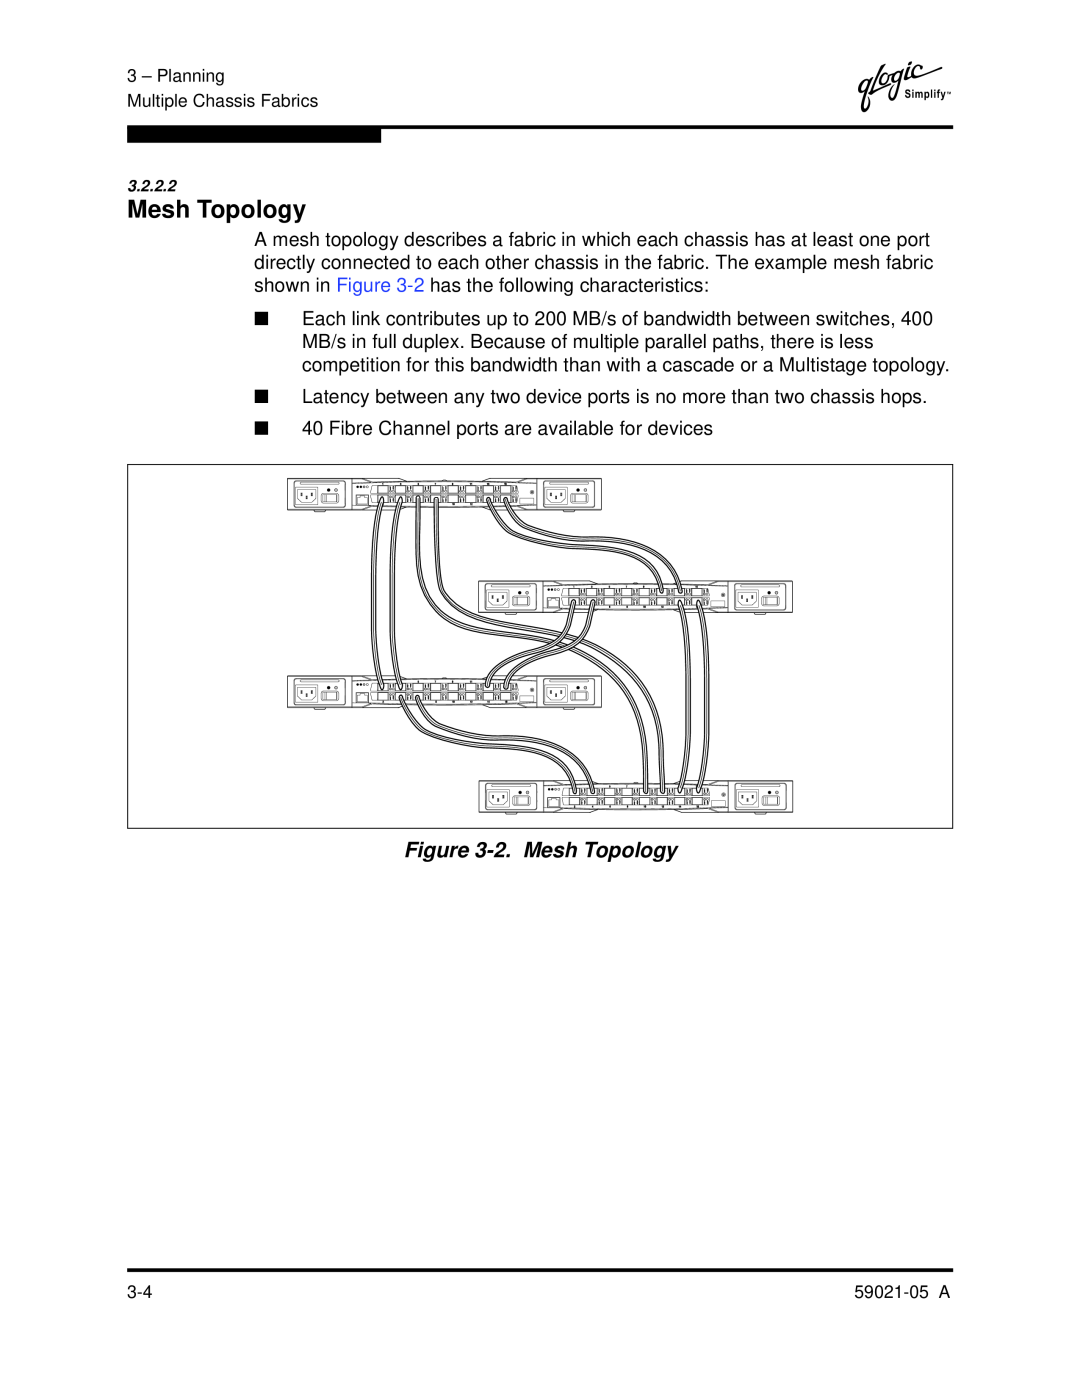 Q-Logic 59021-05 manual 2. Mesh Topology 